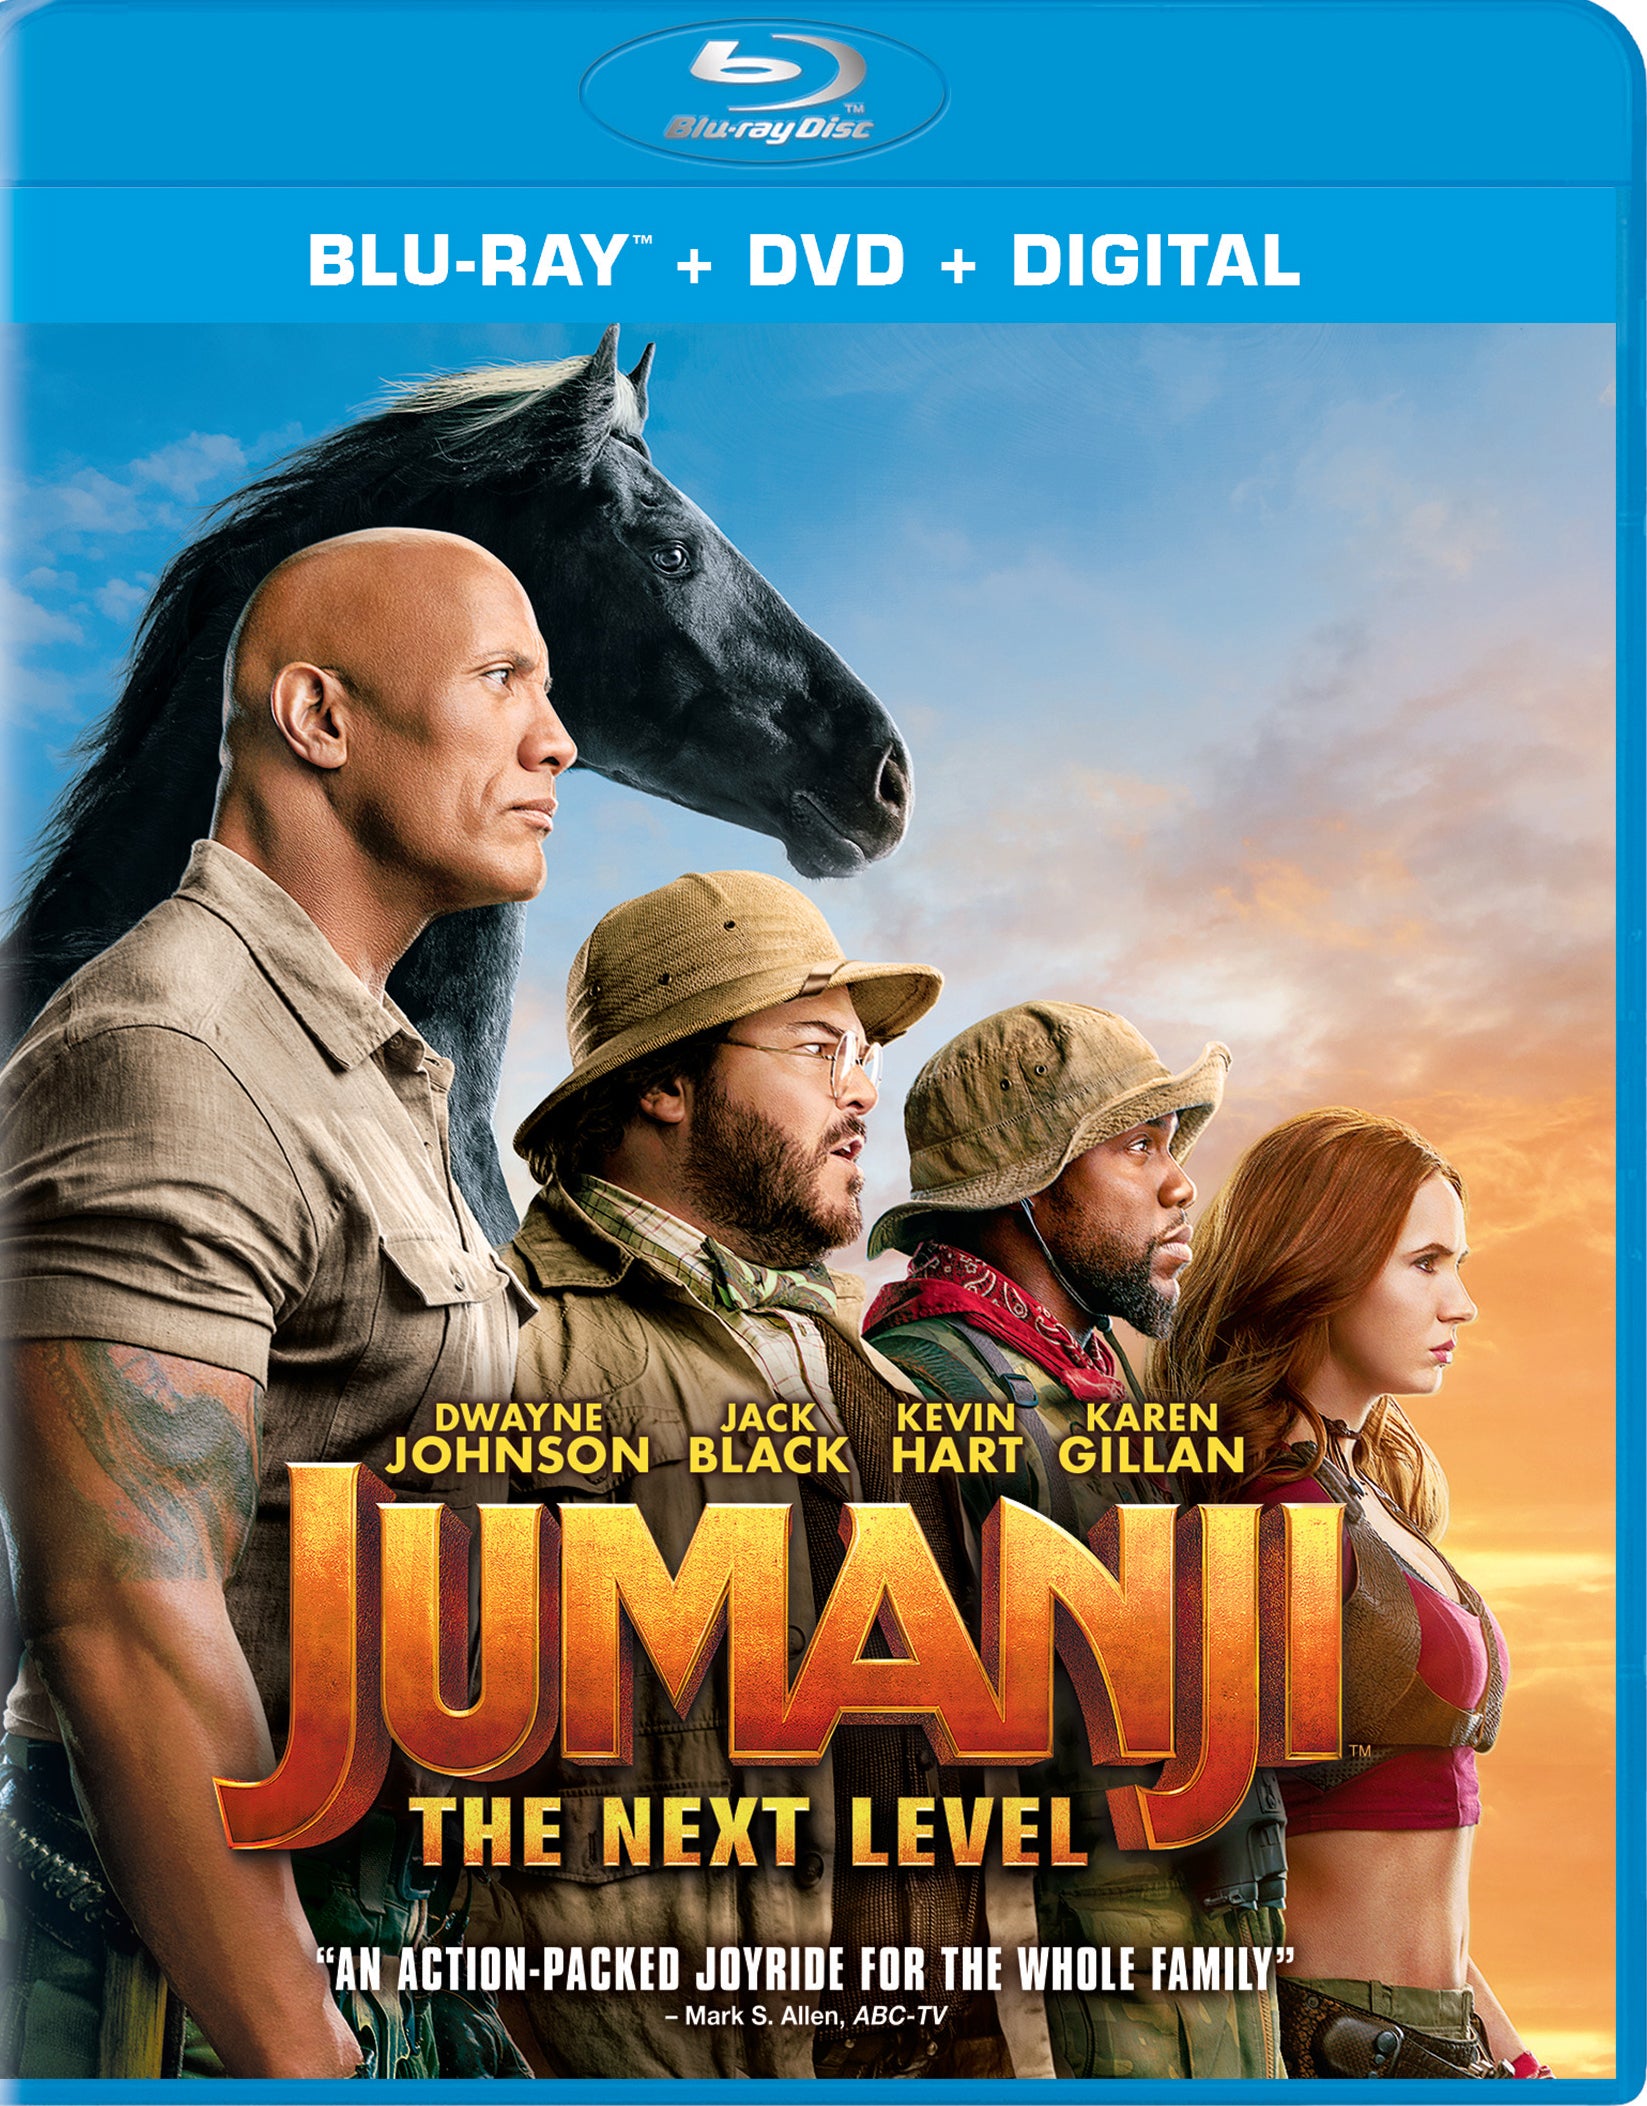 Jumanji: The Next Level [Includes Digital Copy] [Blu-ray/DVD] cover art